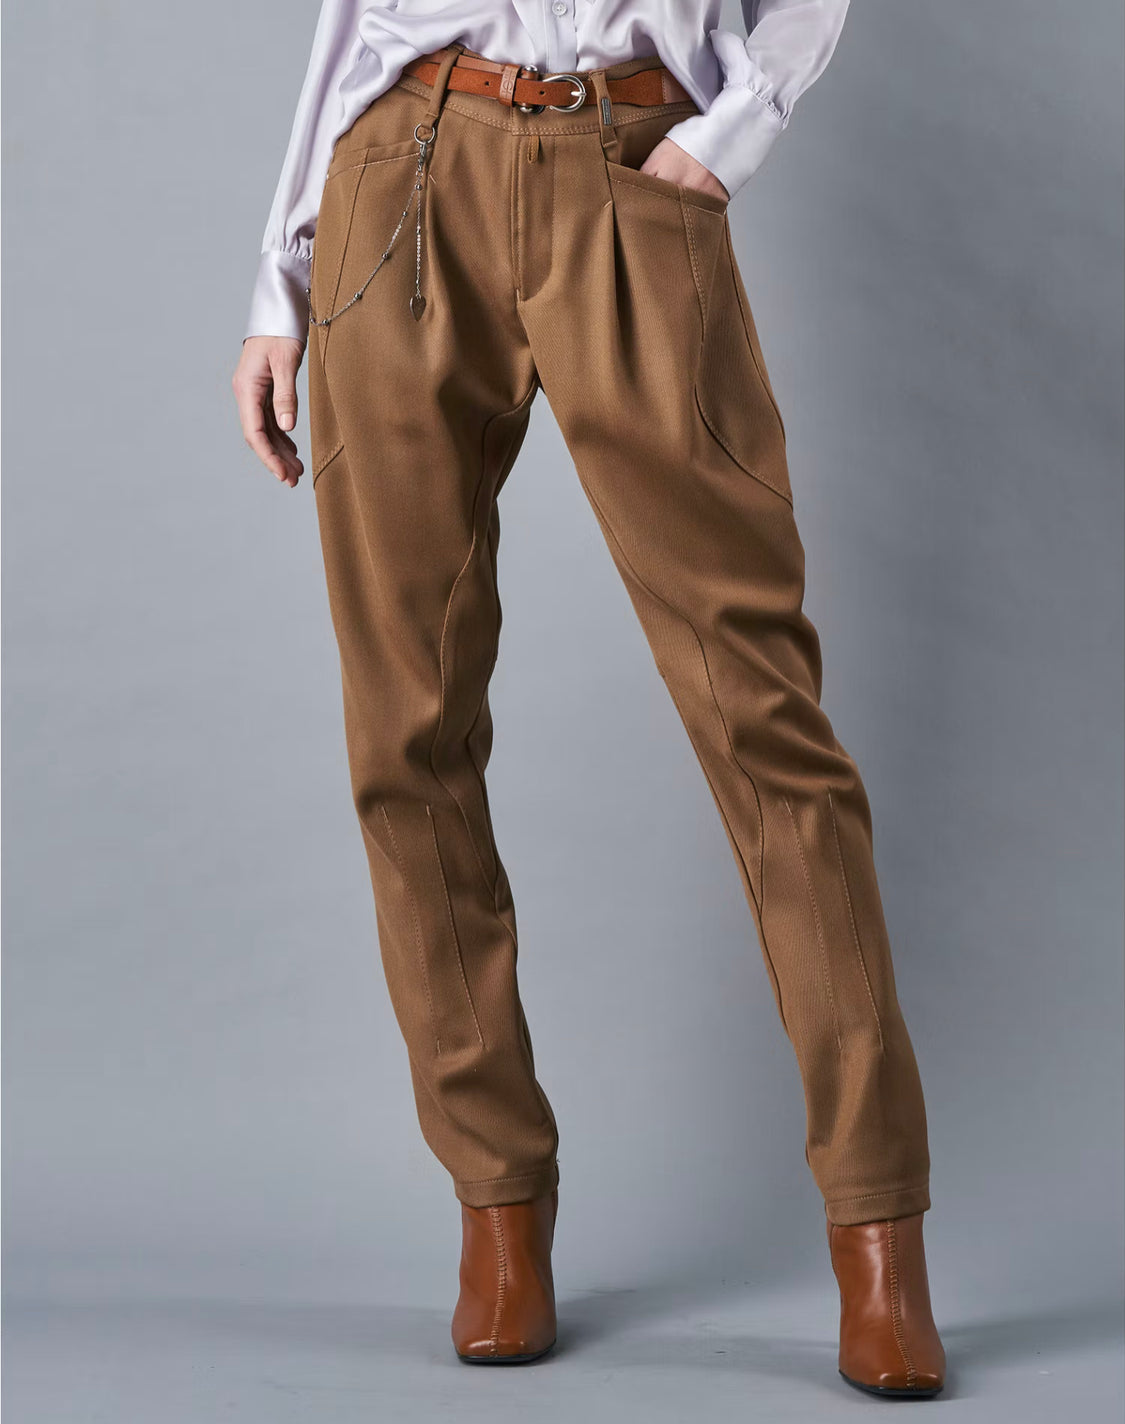 Men's Real Leather Breeches/Pants White Side Stripes Leather Jodhpur Style  Pants | eBay